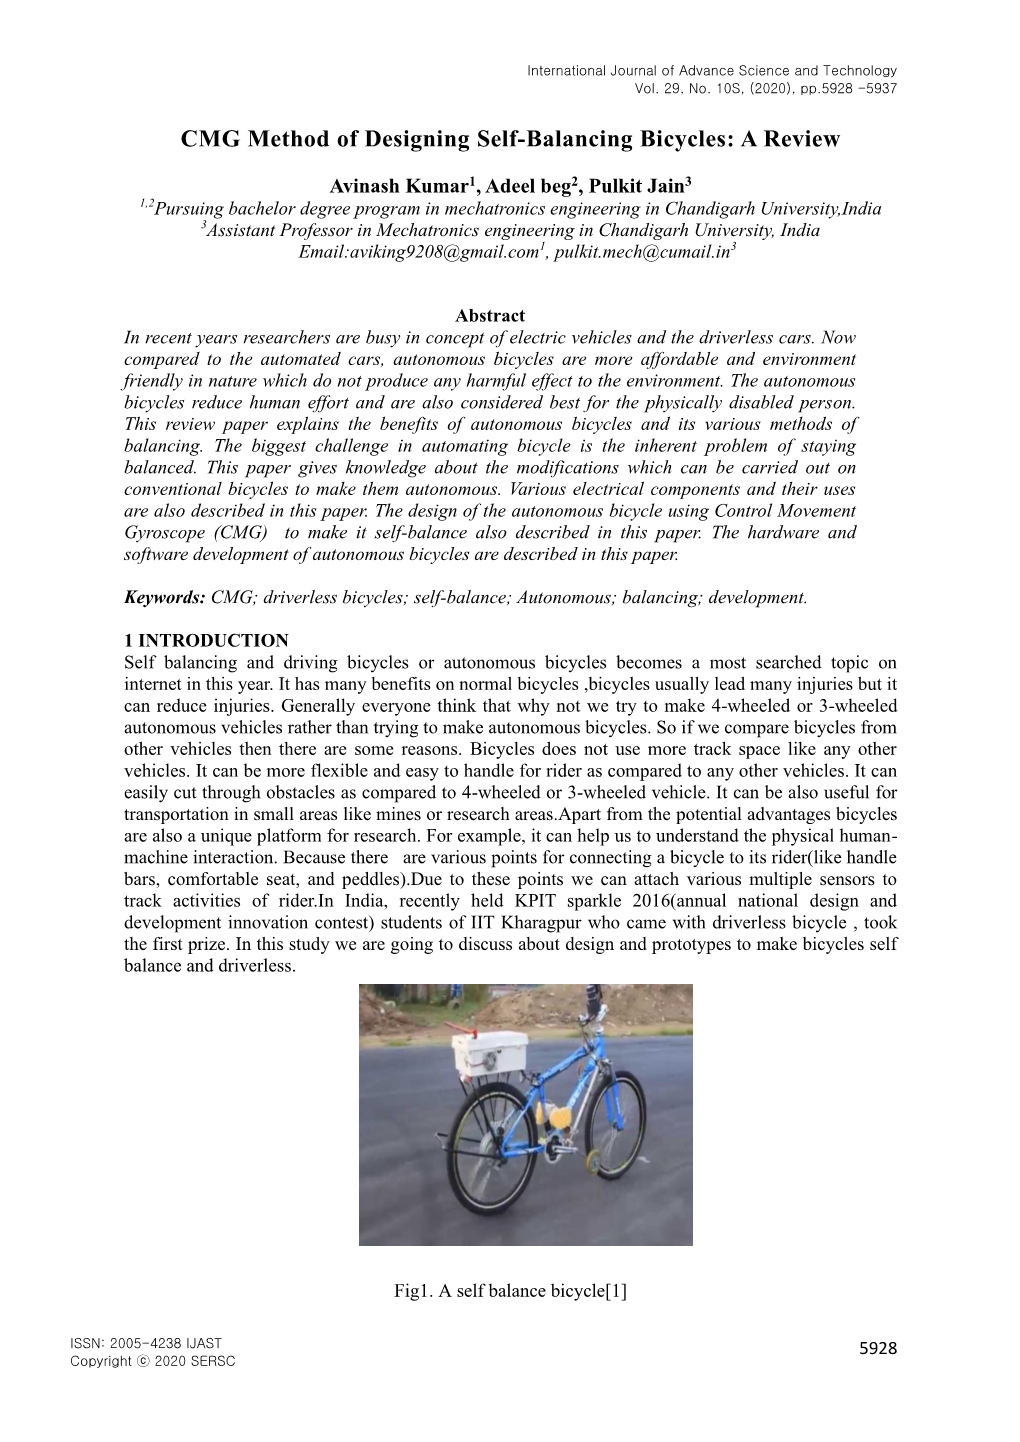 CMG Method of Designing Self-Balancing Bicycles: a Review